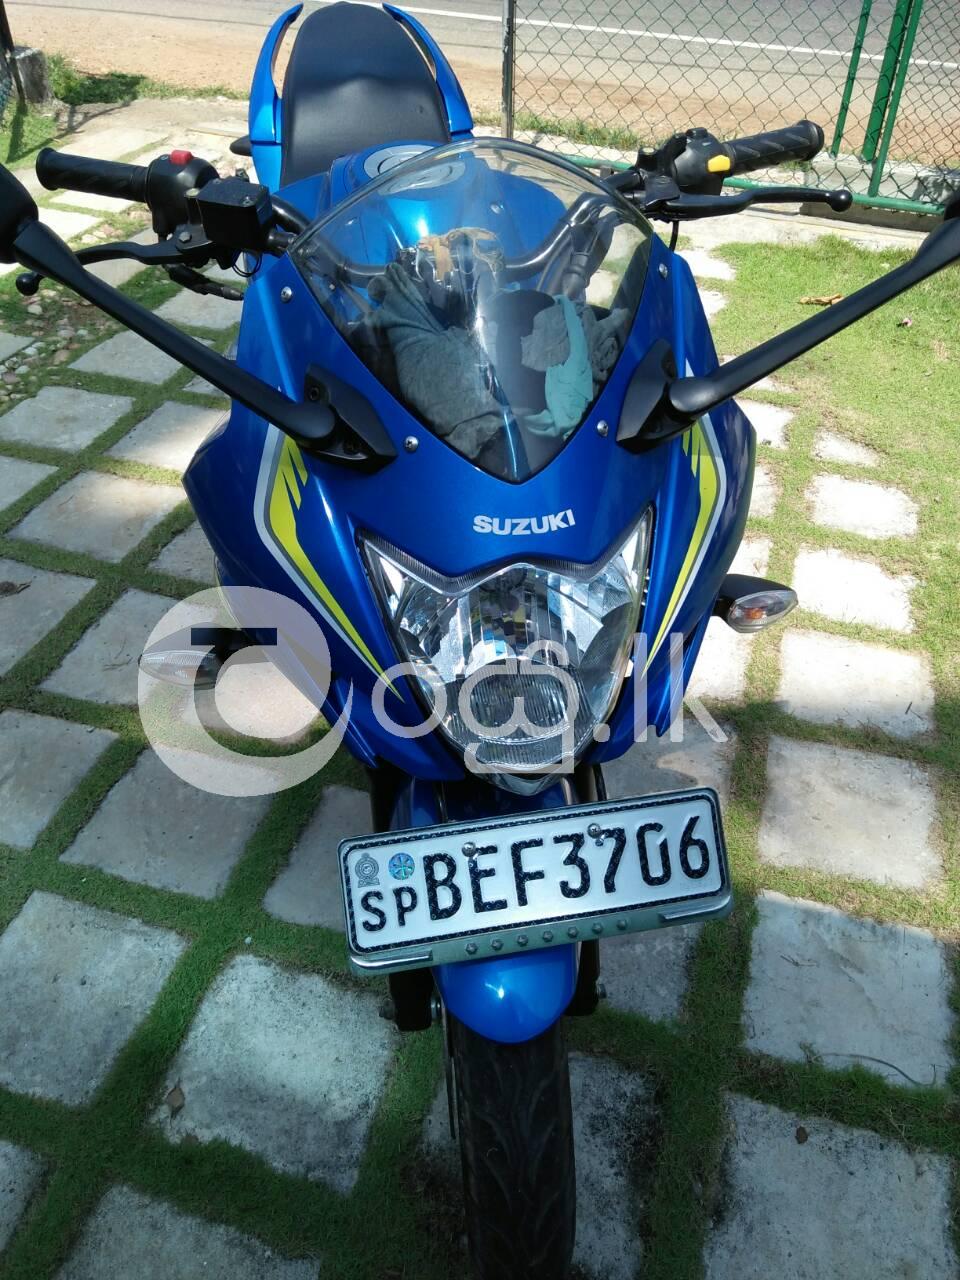 Suzuki Gixxer SP 2016 Motorbikes & Scooters in Ambalangoda